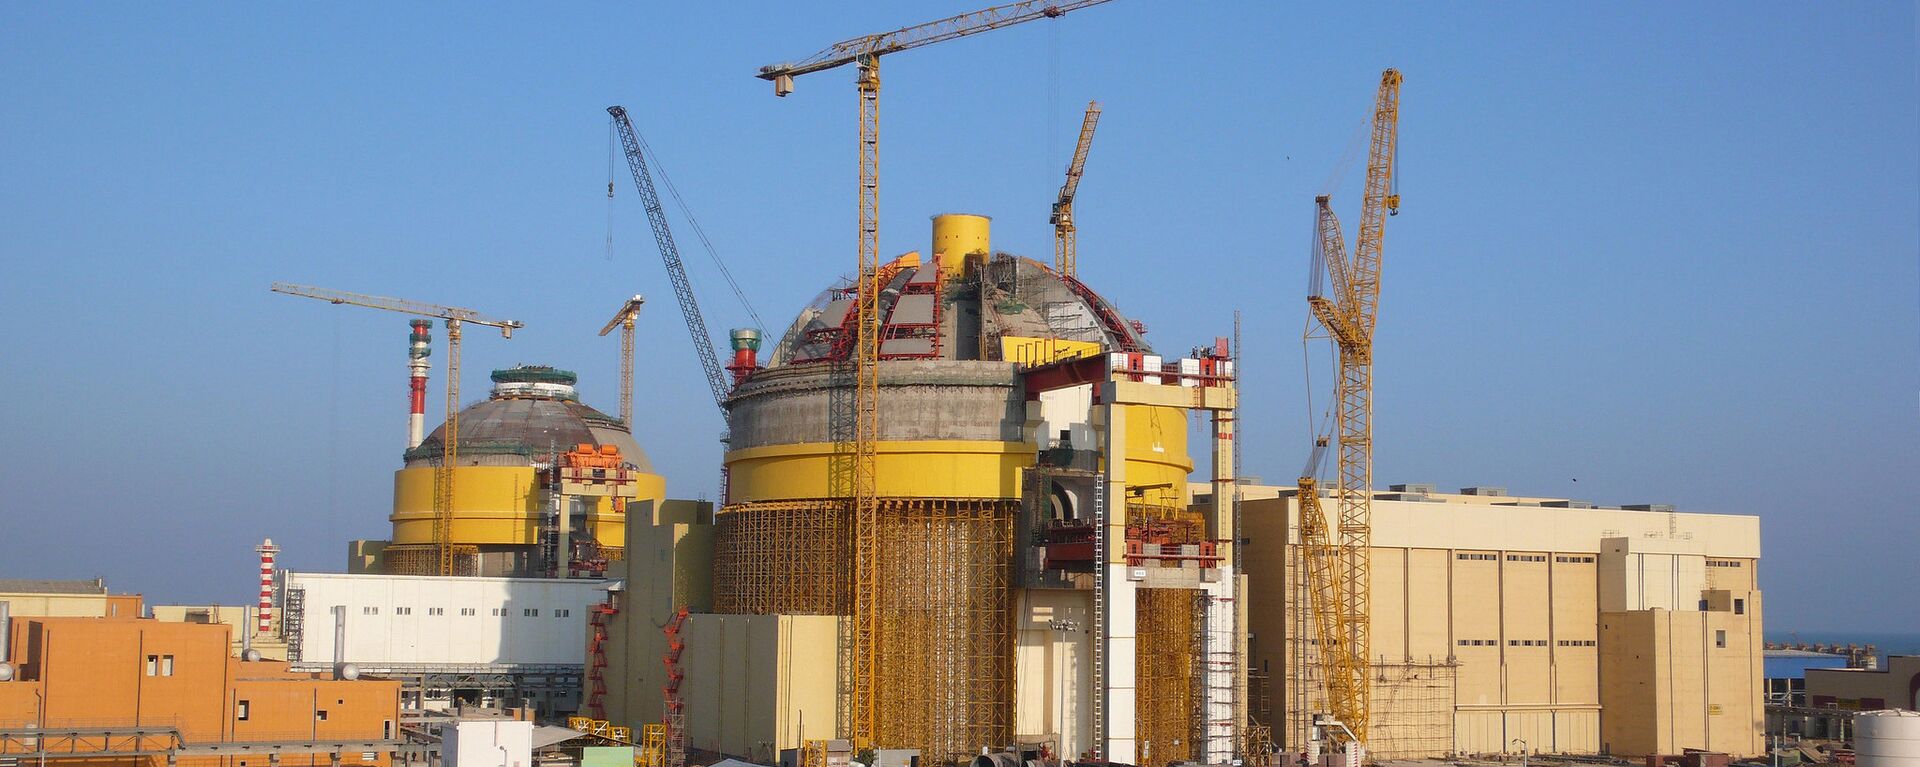 La planta nuclear india de Kudankulam - Sputnik Mundo, 1920, 29.06.2021